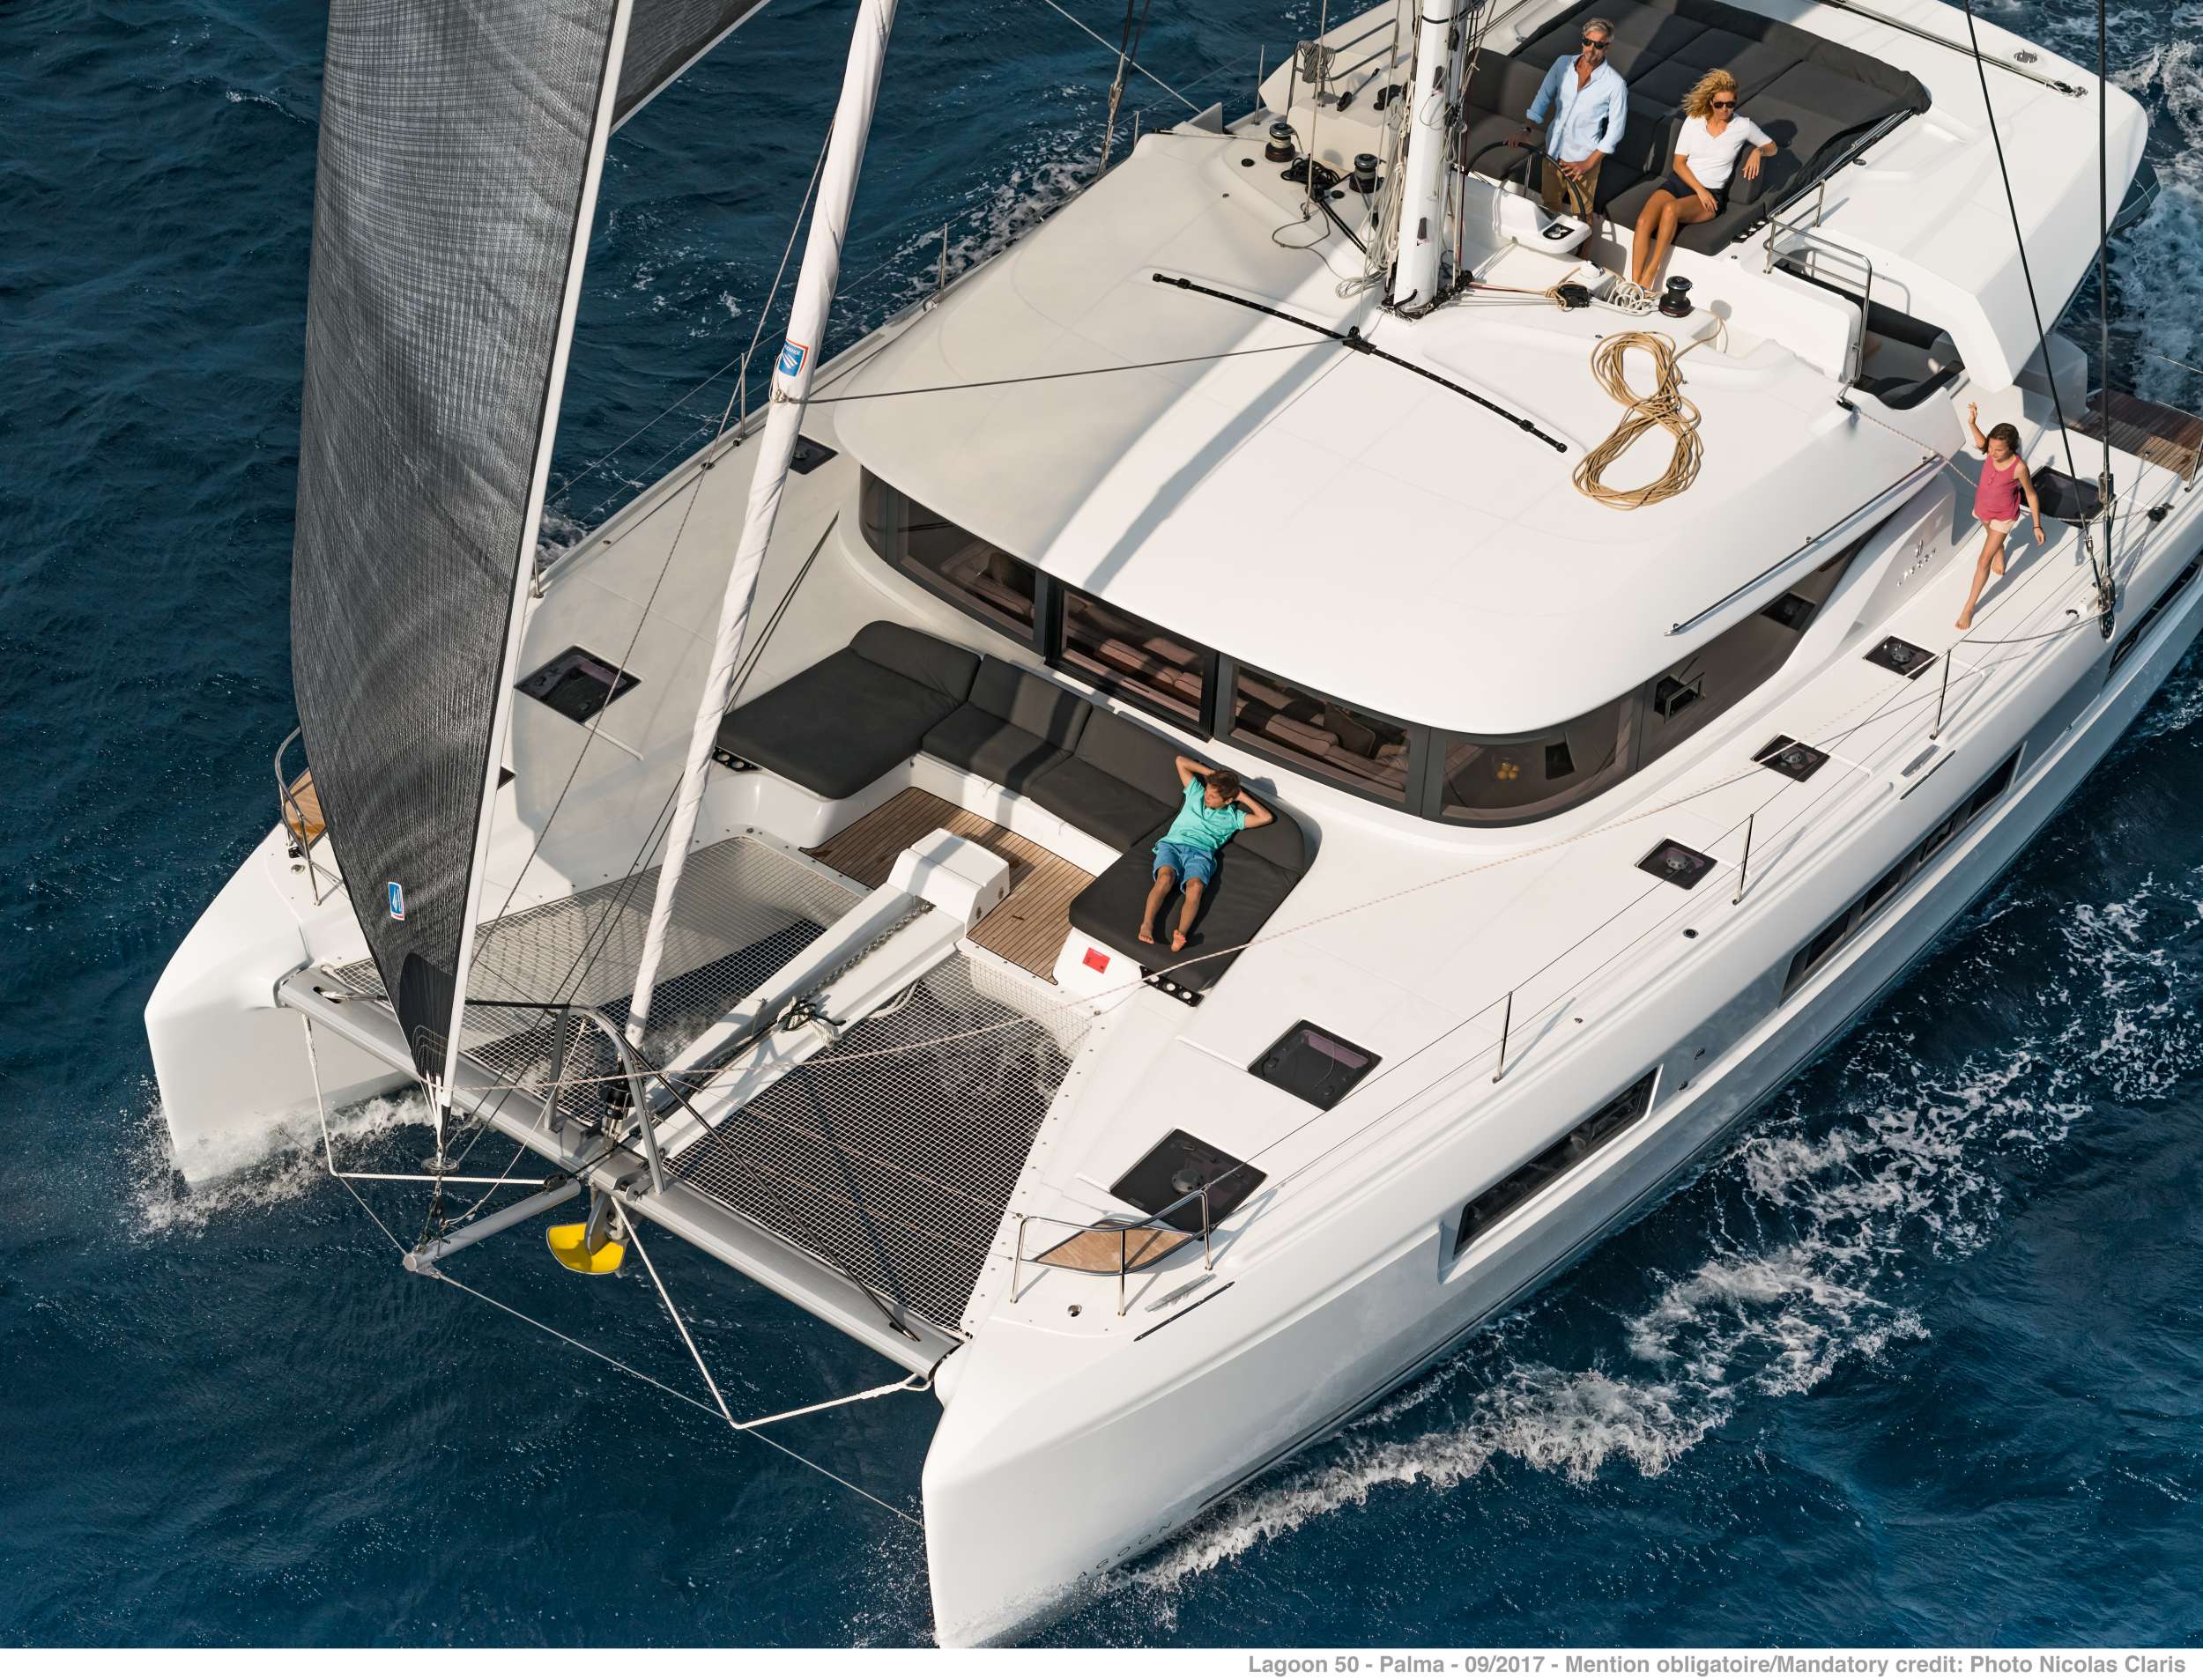 ONEIDA 2 - Yacht Charter Corfu & Boat hire in Greece 6